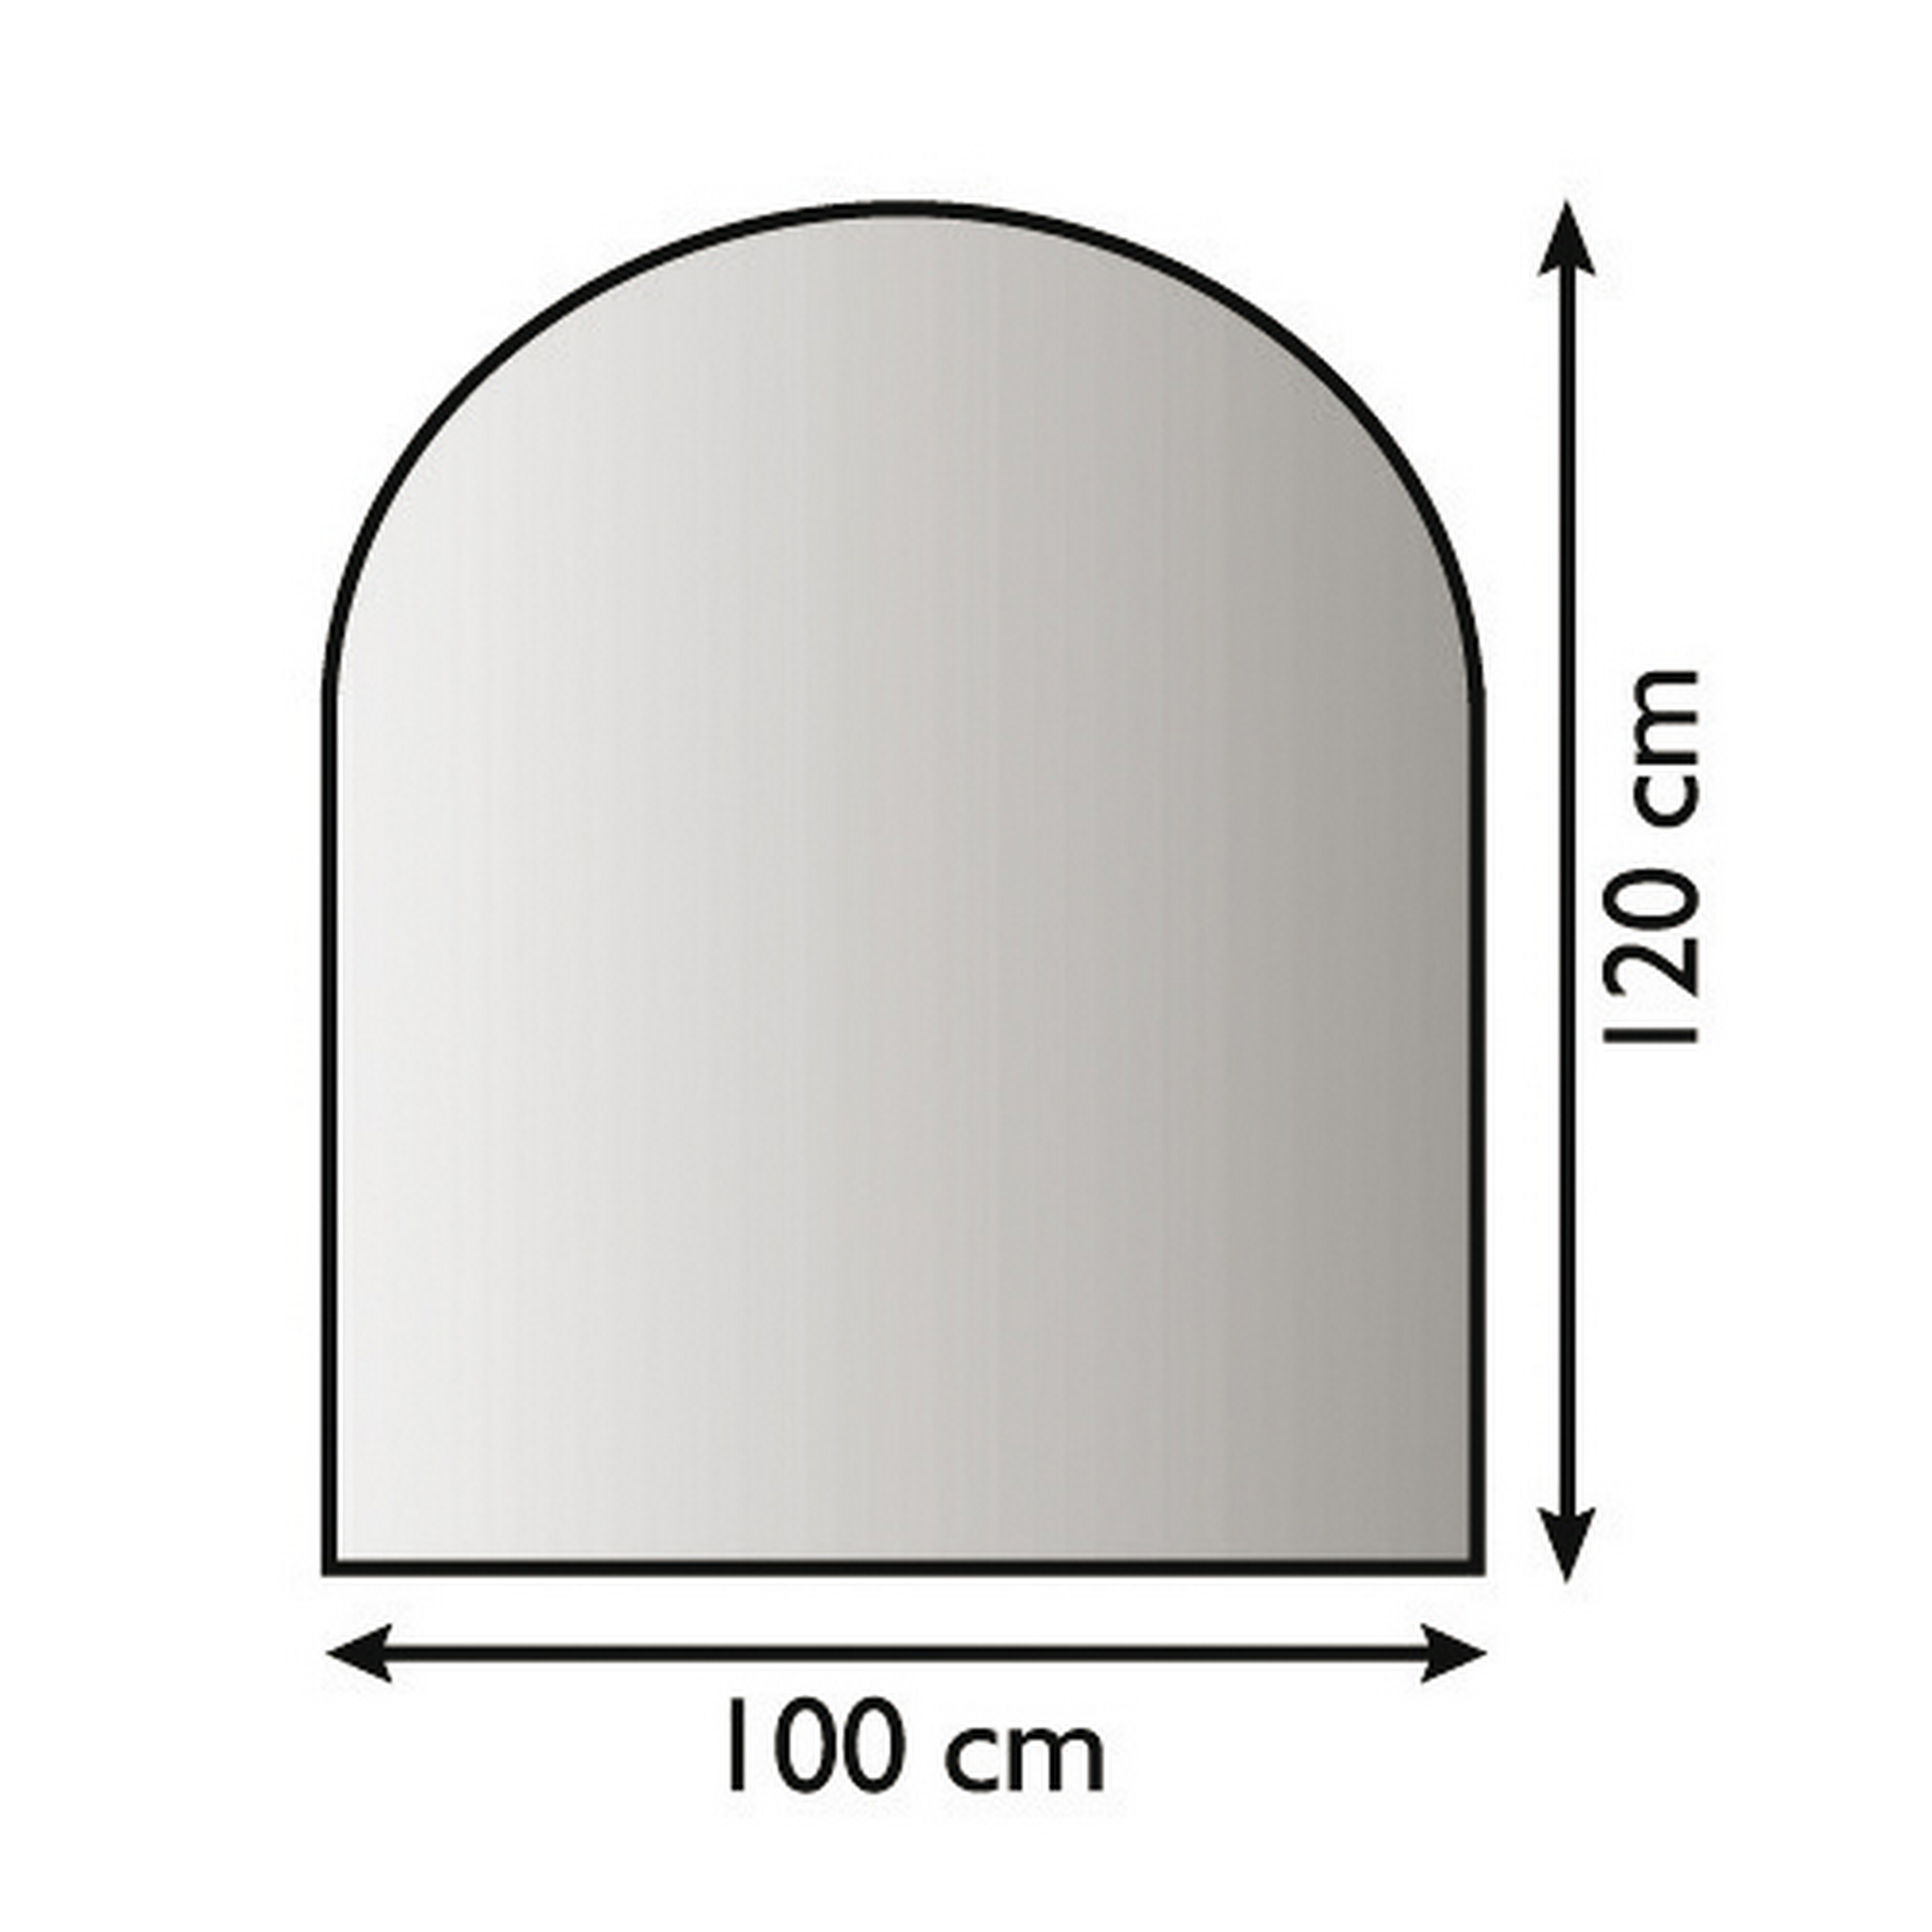 Funkenschutzplatte D-Form 100 x 120 x 0,15 cm Stahlblech anthrazitfarben + product picture